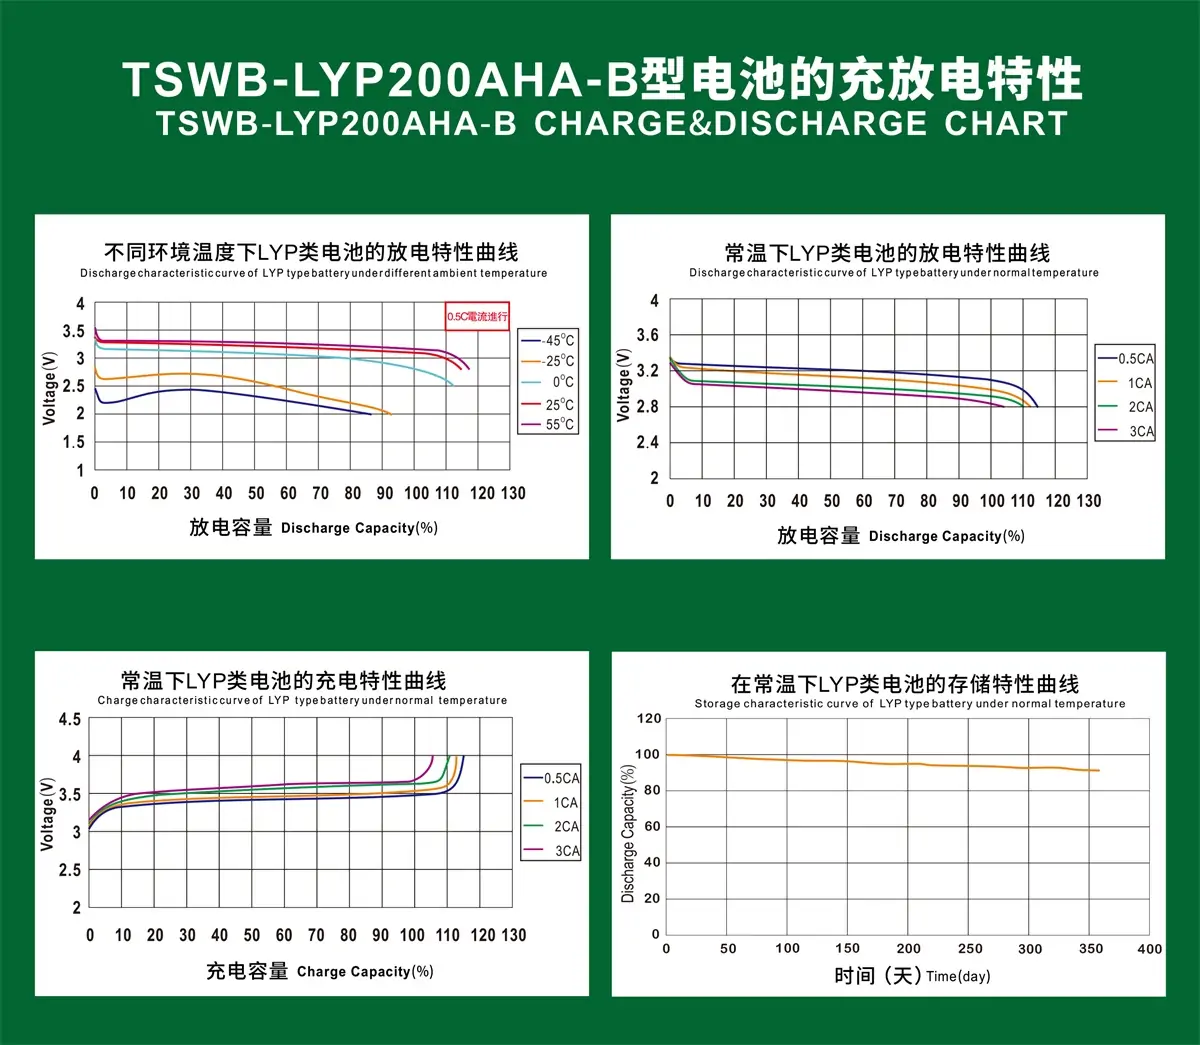 TSWB-LYP200AHA-B CHARGE&DISCHARGE CHART